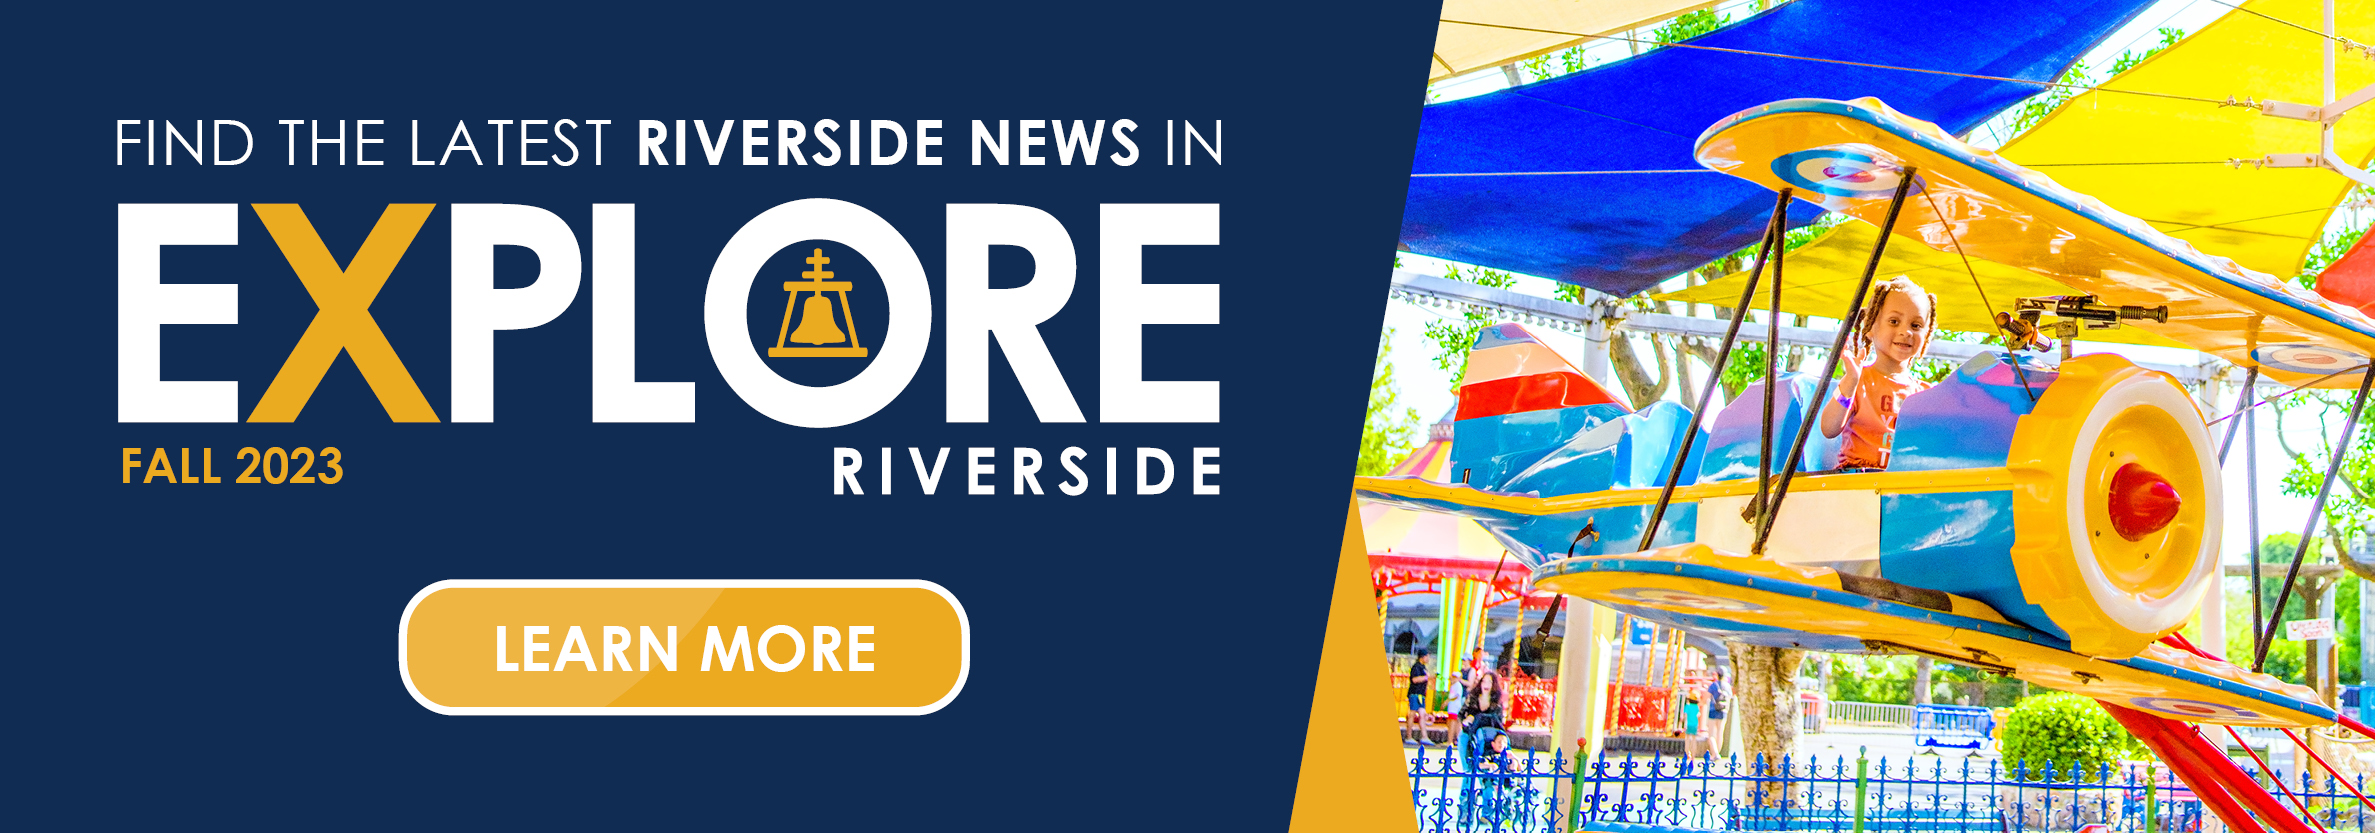 City of Riverside, CA - City Government - Help Shape Riverside's